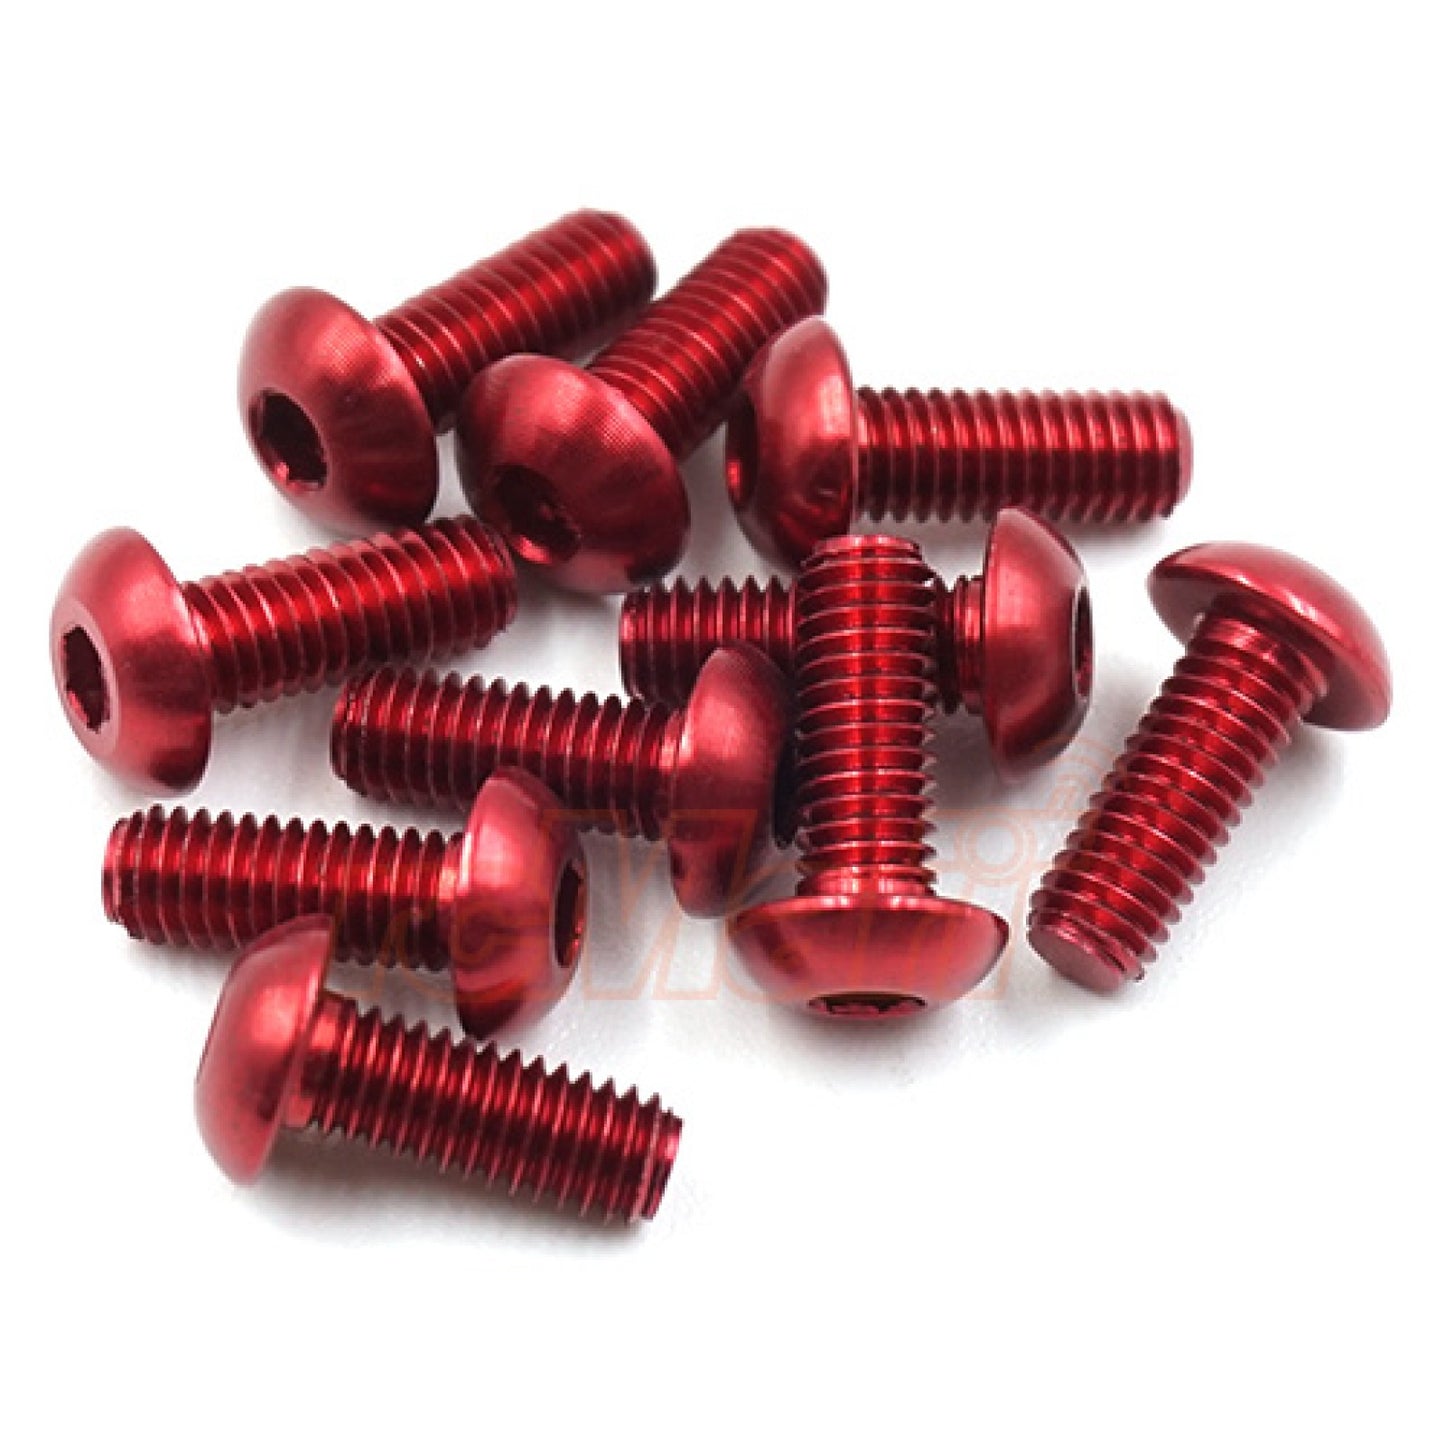 Aluminum 7075 3x8mm Hex Socket Button Head Screws 10pcs Red